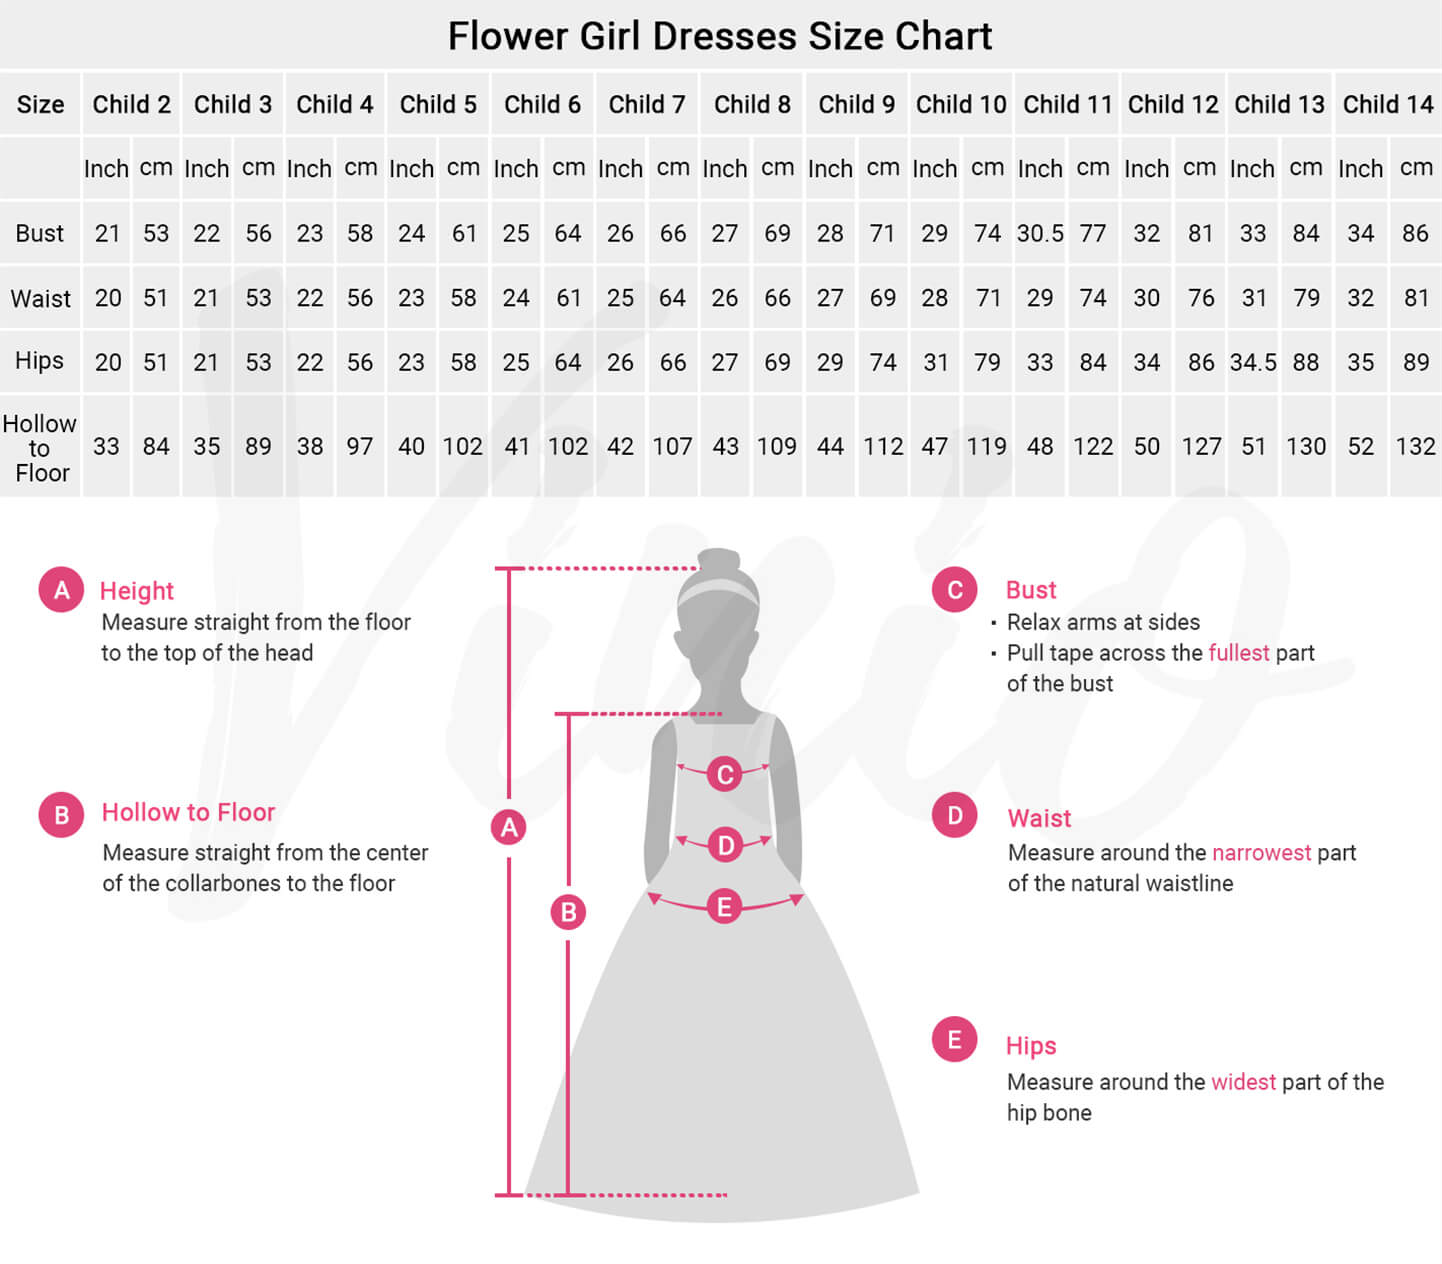 Toddler Dress Size Chart